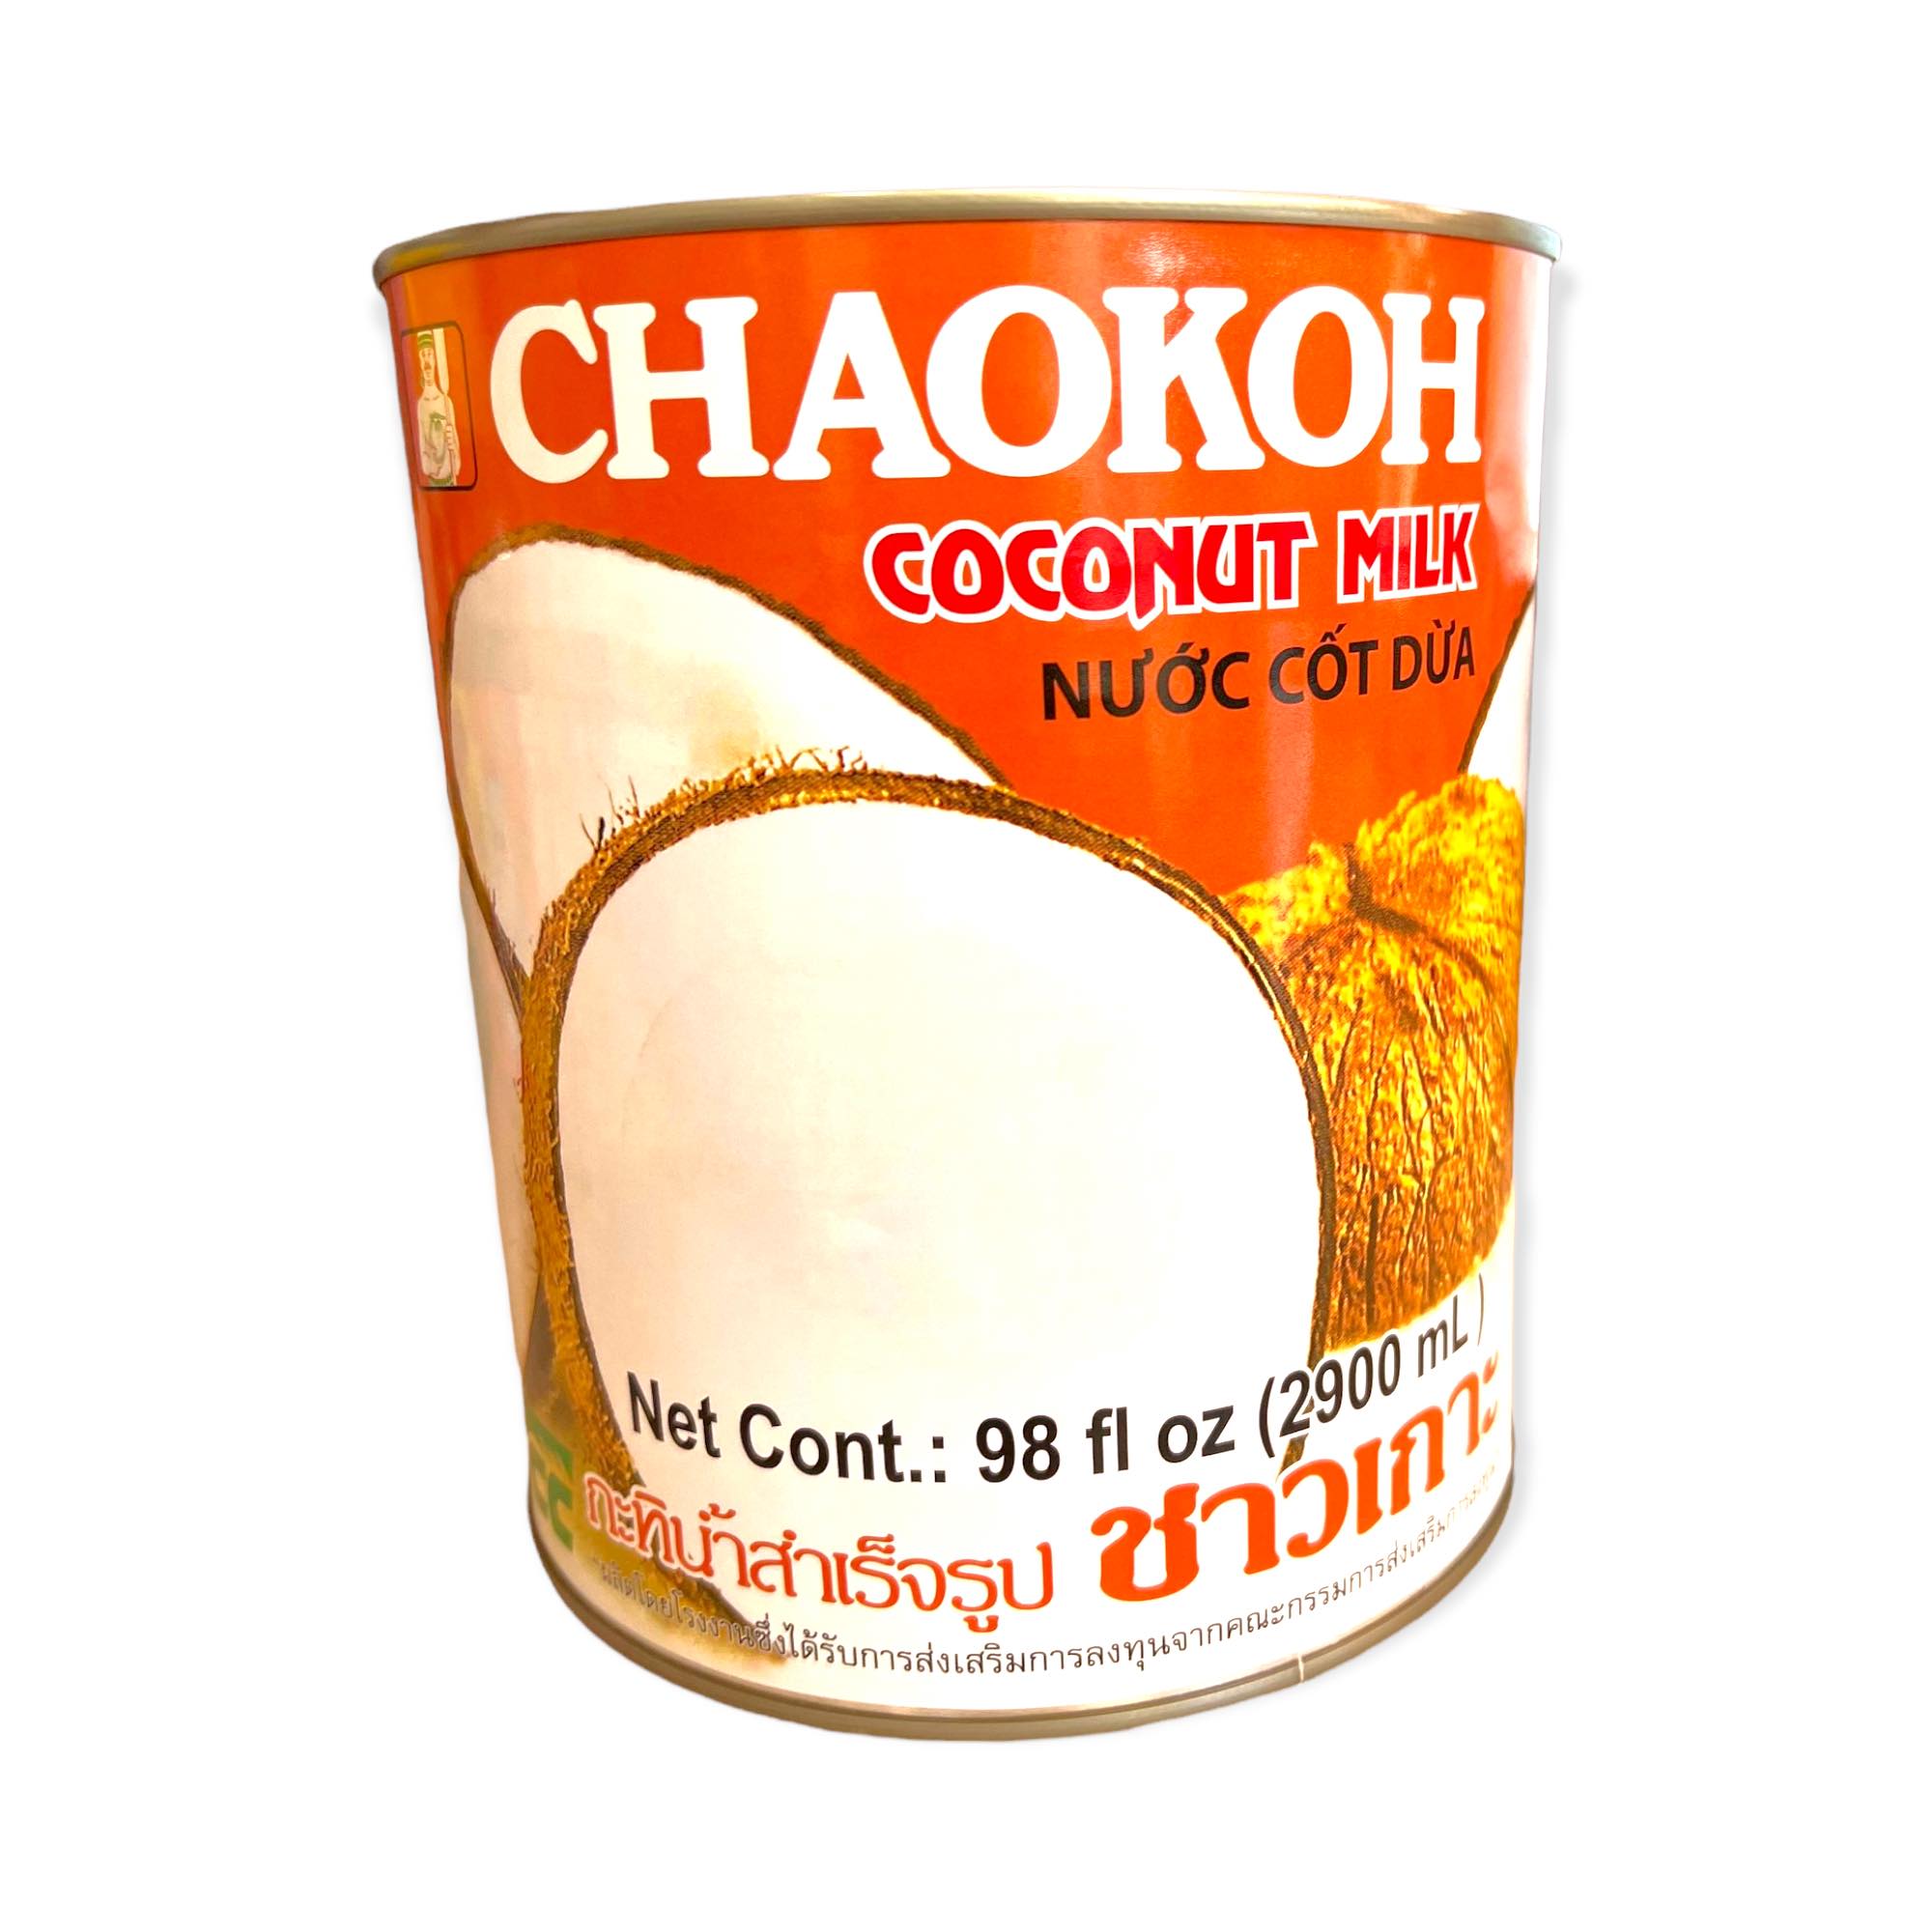 Chaokoh - Coconut Milk - 5 LBS